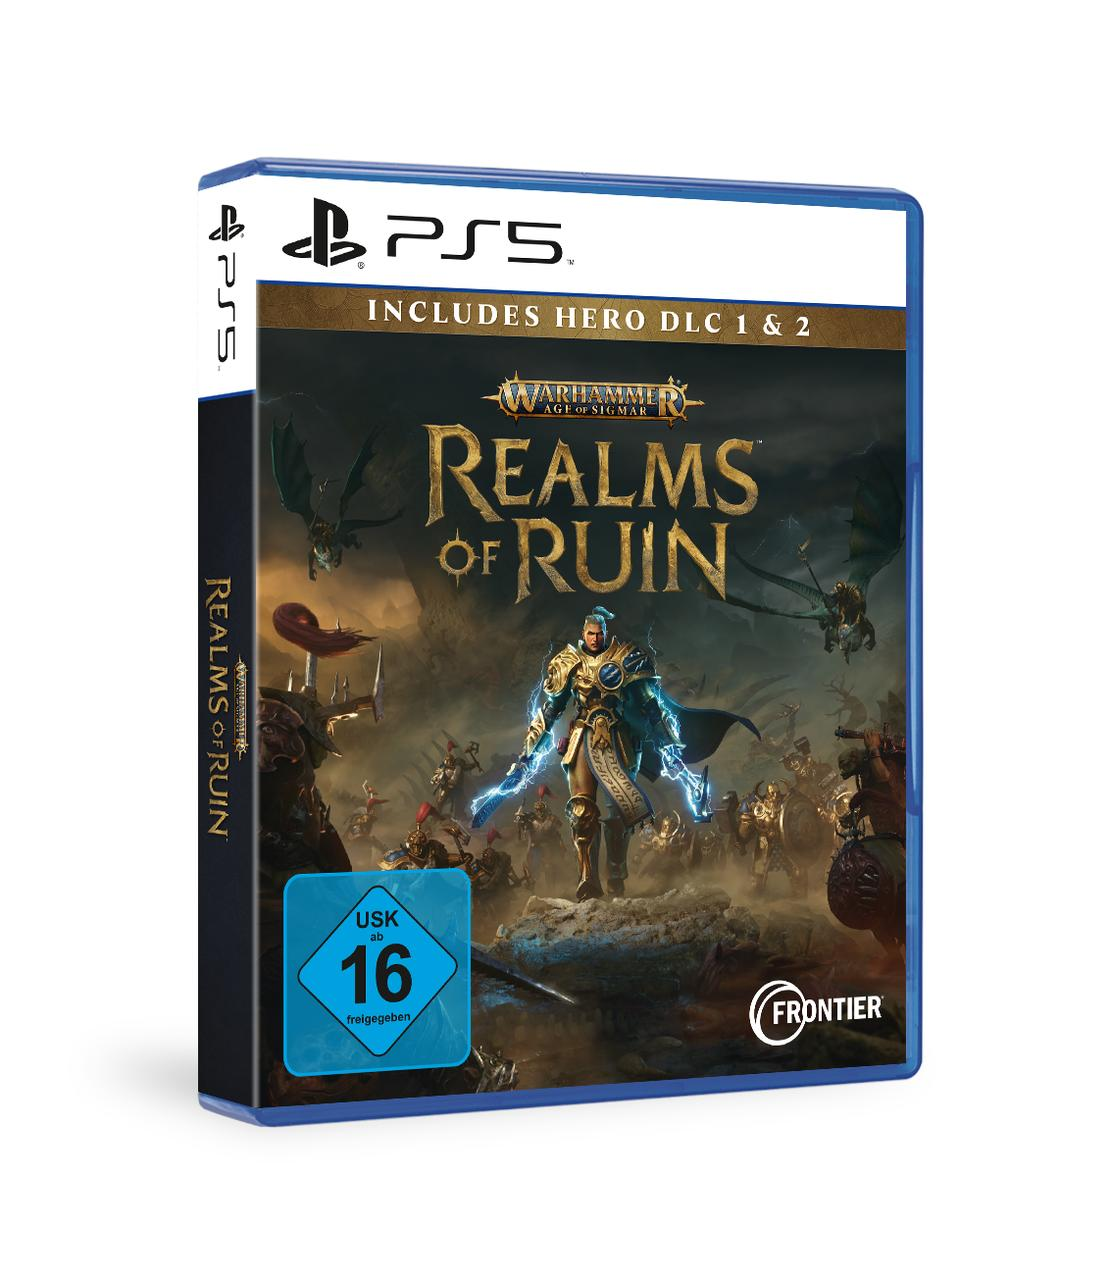 Warhammer Age of of [PlayStation - Realms 5] Sigmar: Ruin